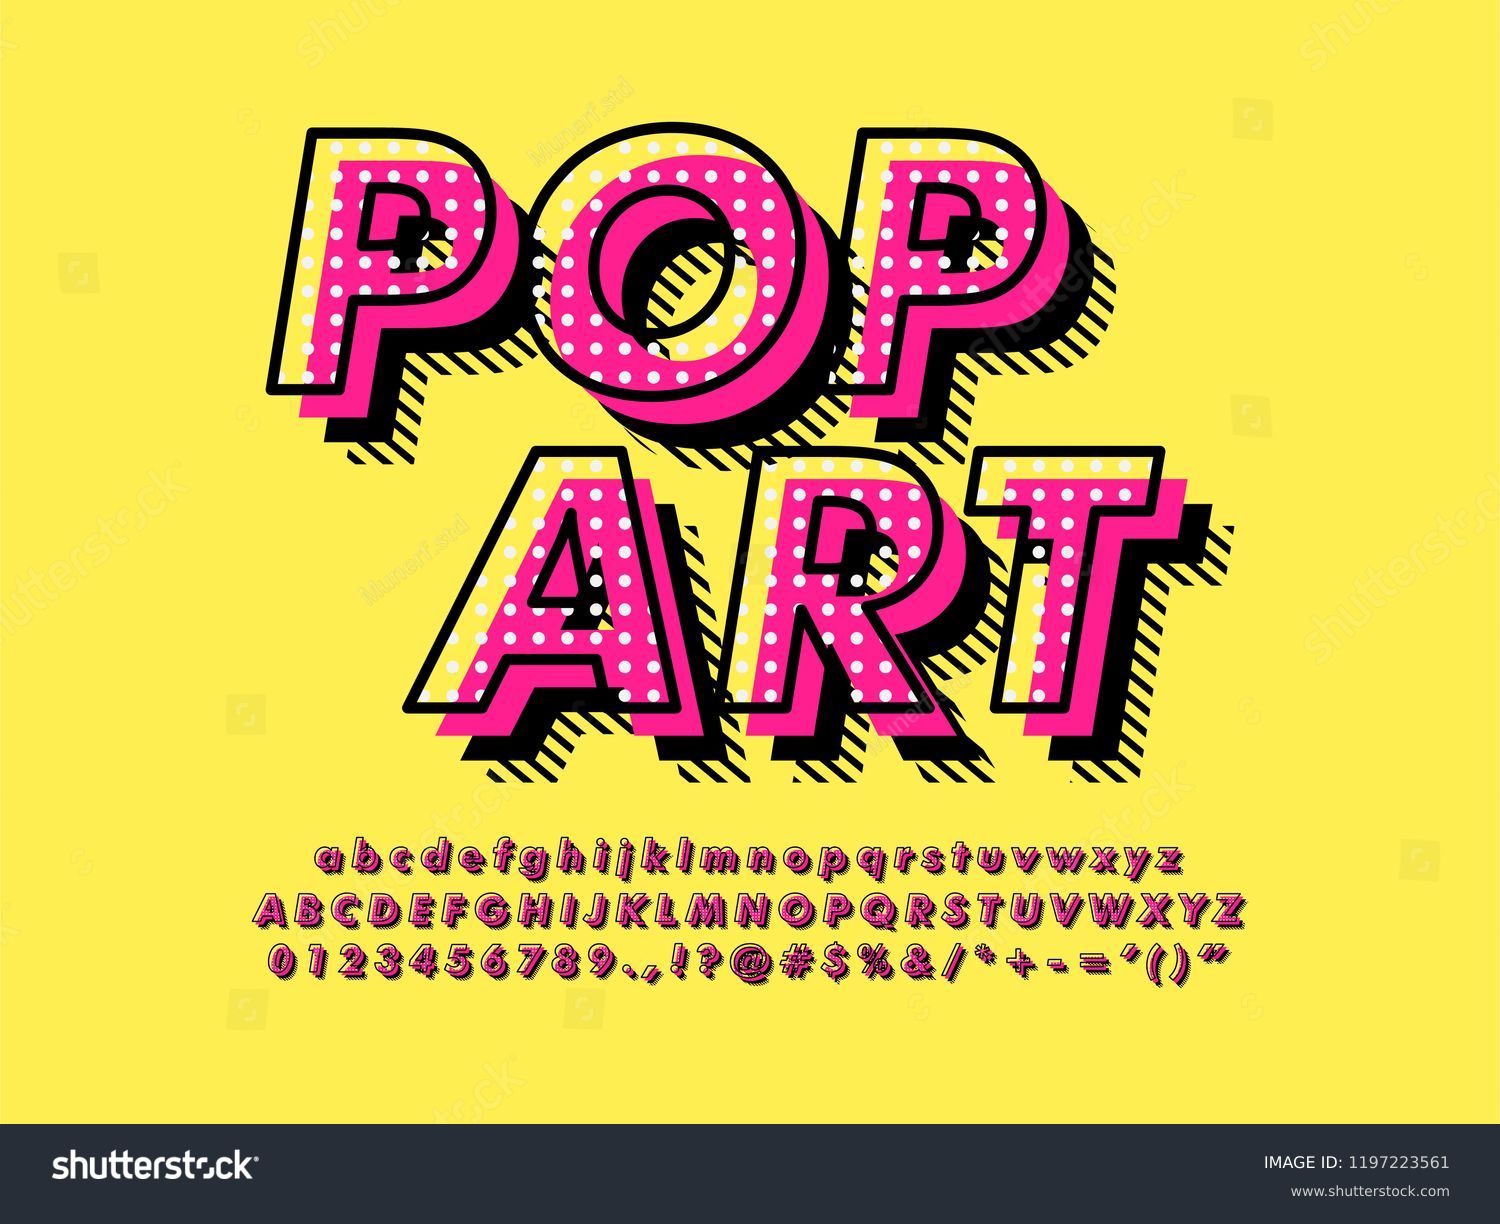 27132 Imágenes De Pop Art Shirt Design Imágenes Fotos Y Vectores De Stock Shutterstock 2081